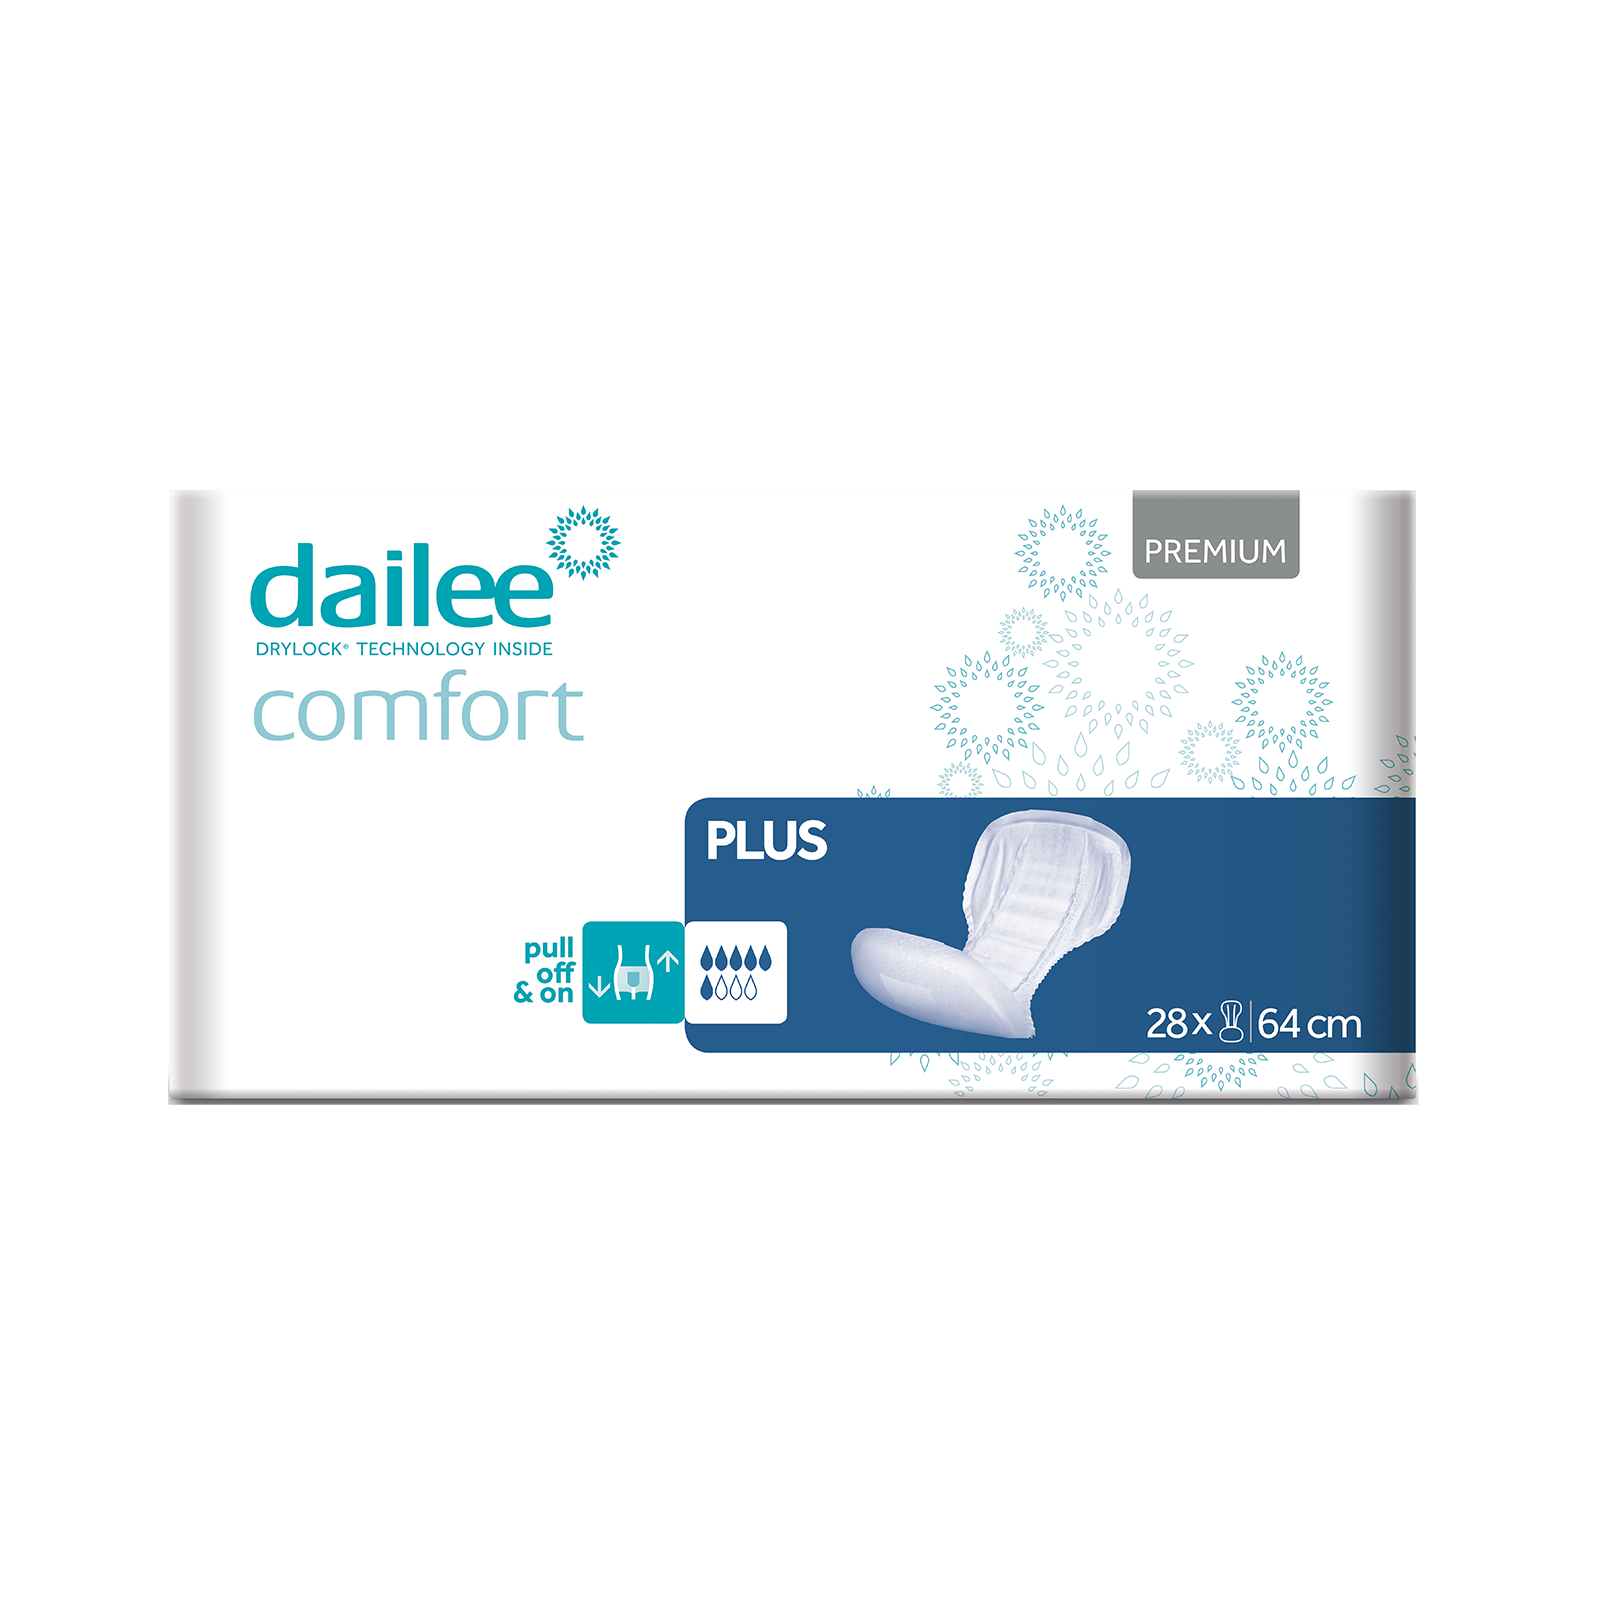 dailee-comfort-normal-premium_thumb